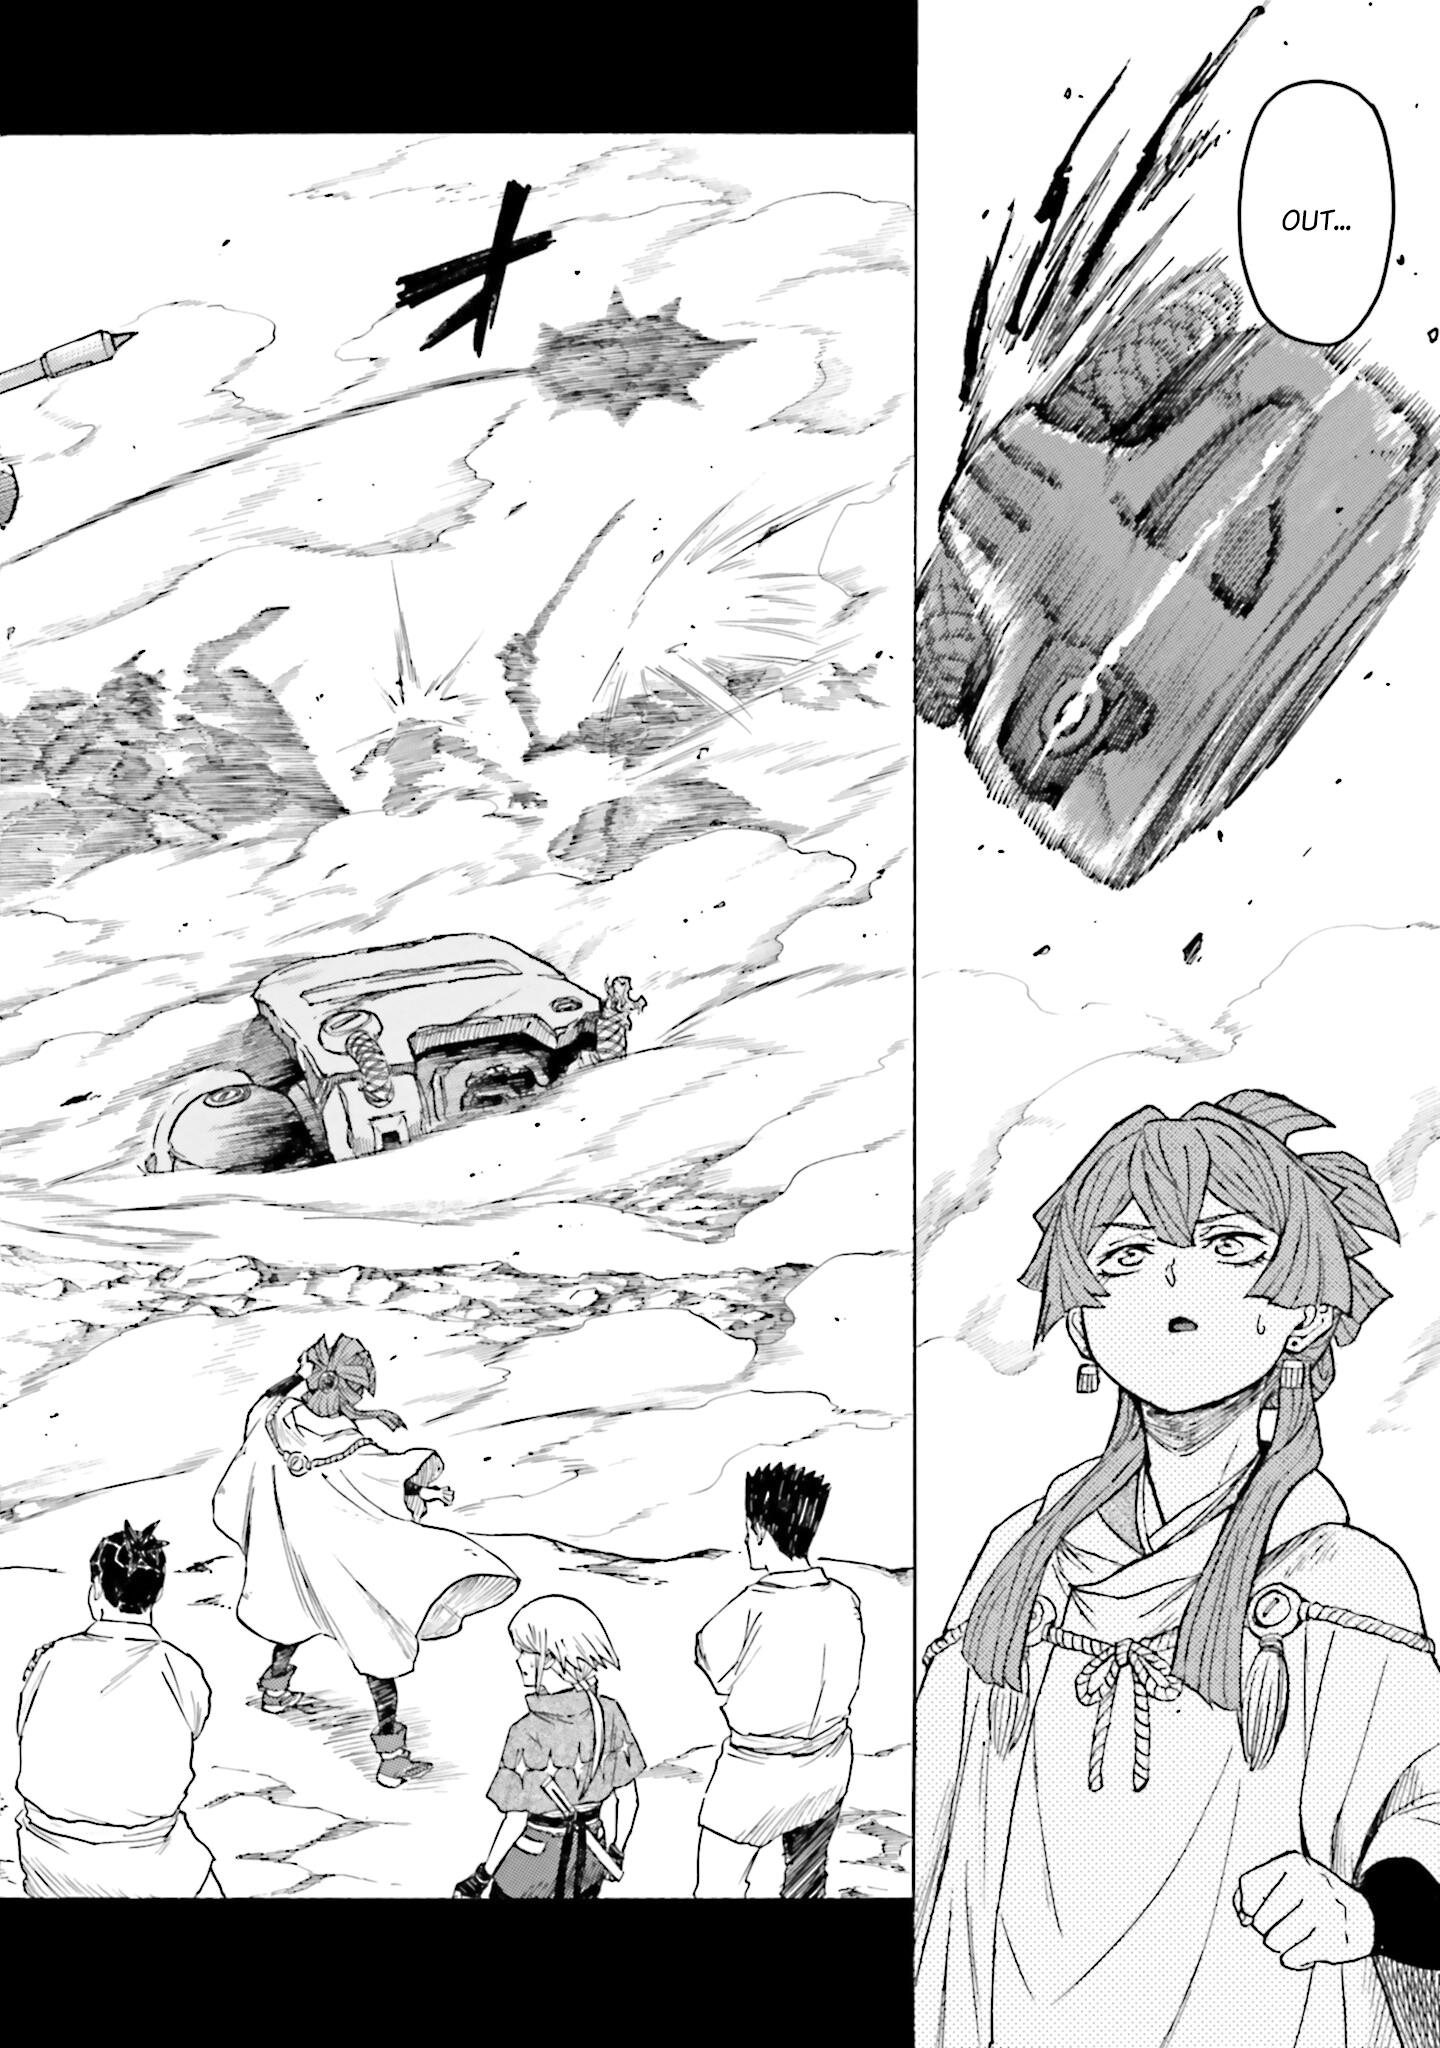 Mobile War History Gundam Burai - Page 2